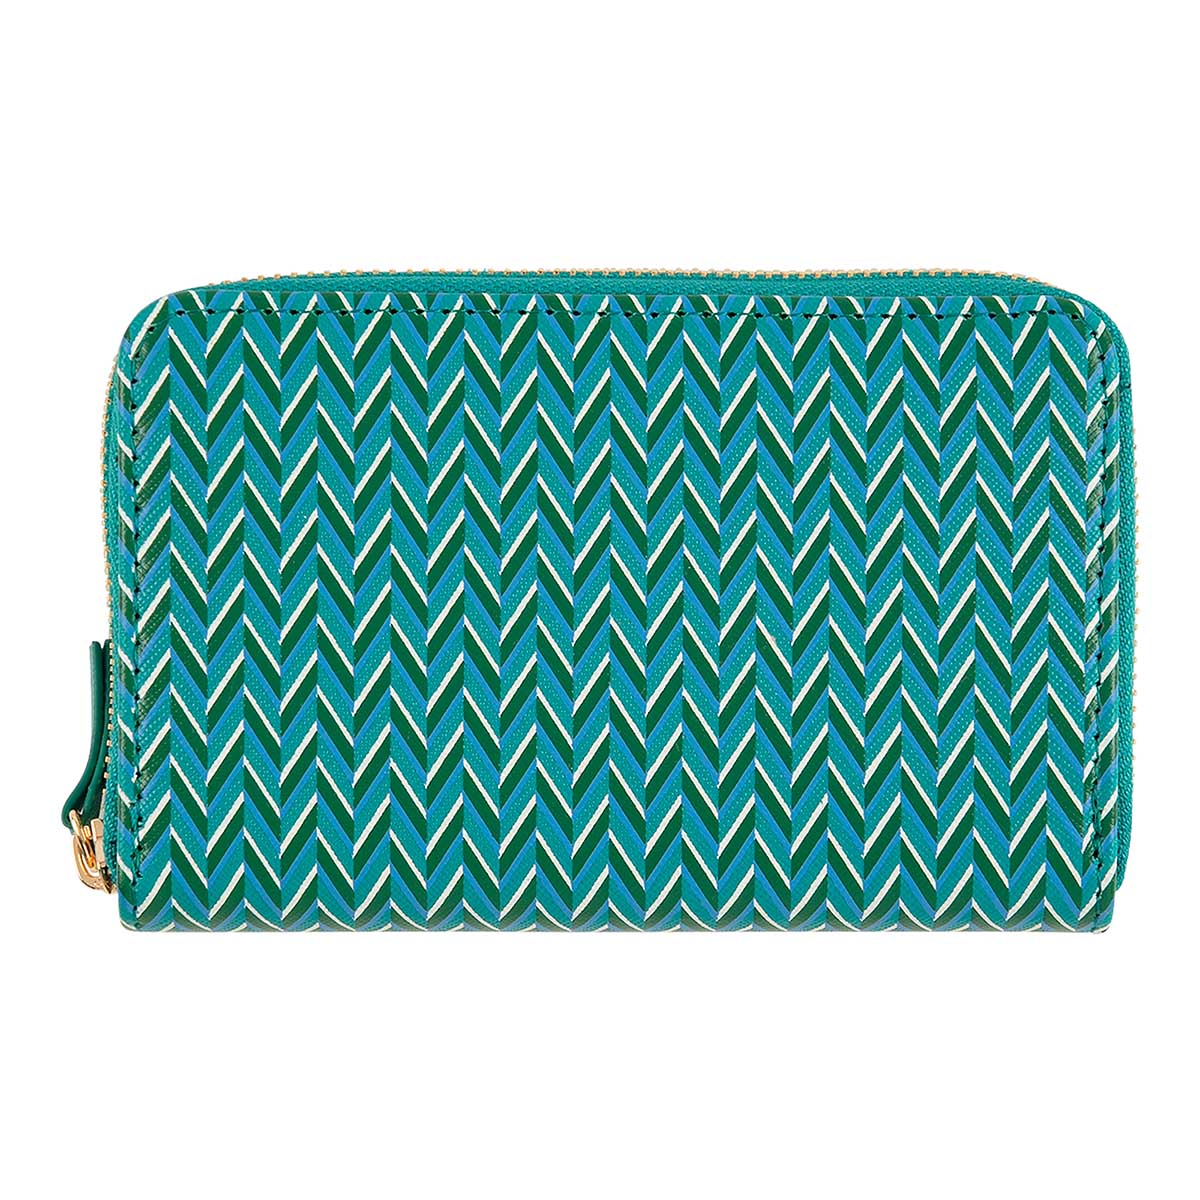 Women's wallet - graphic patterns - green